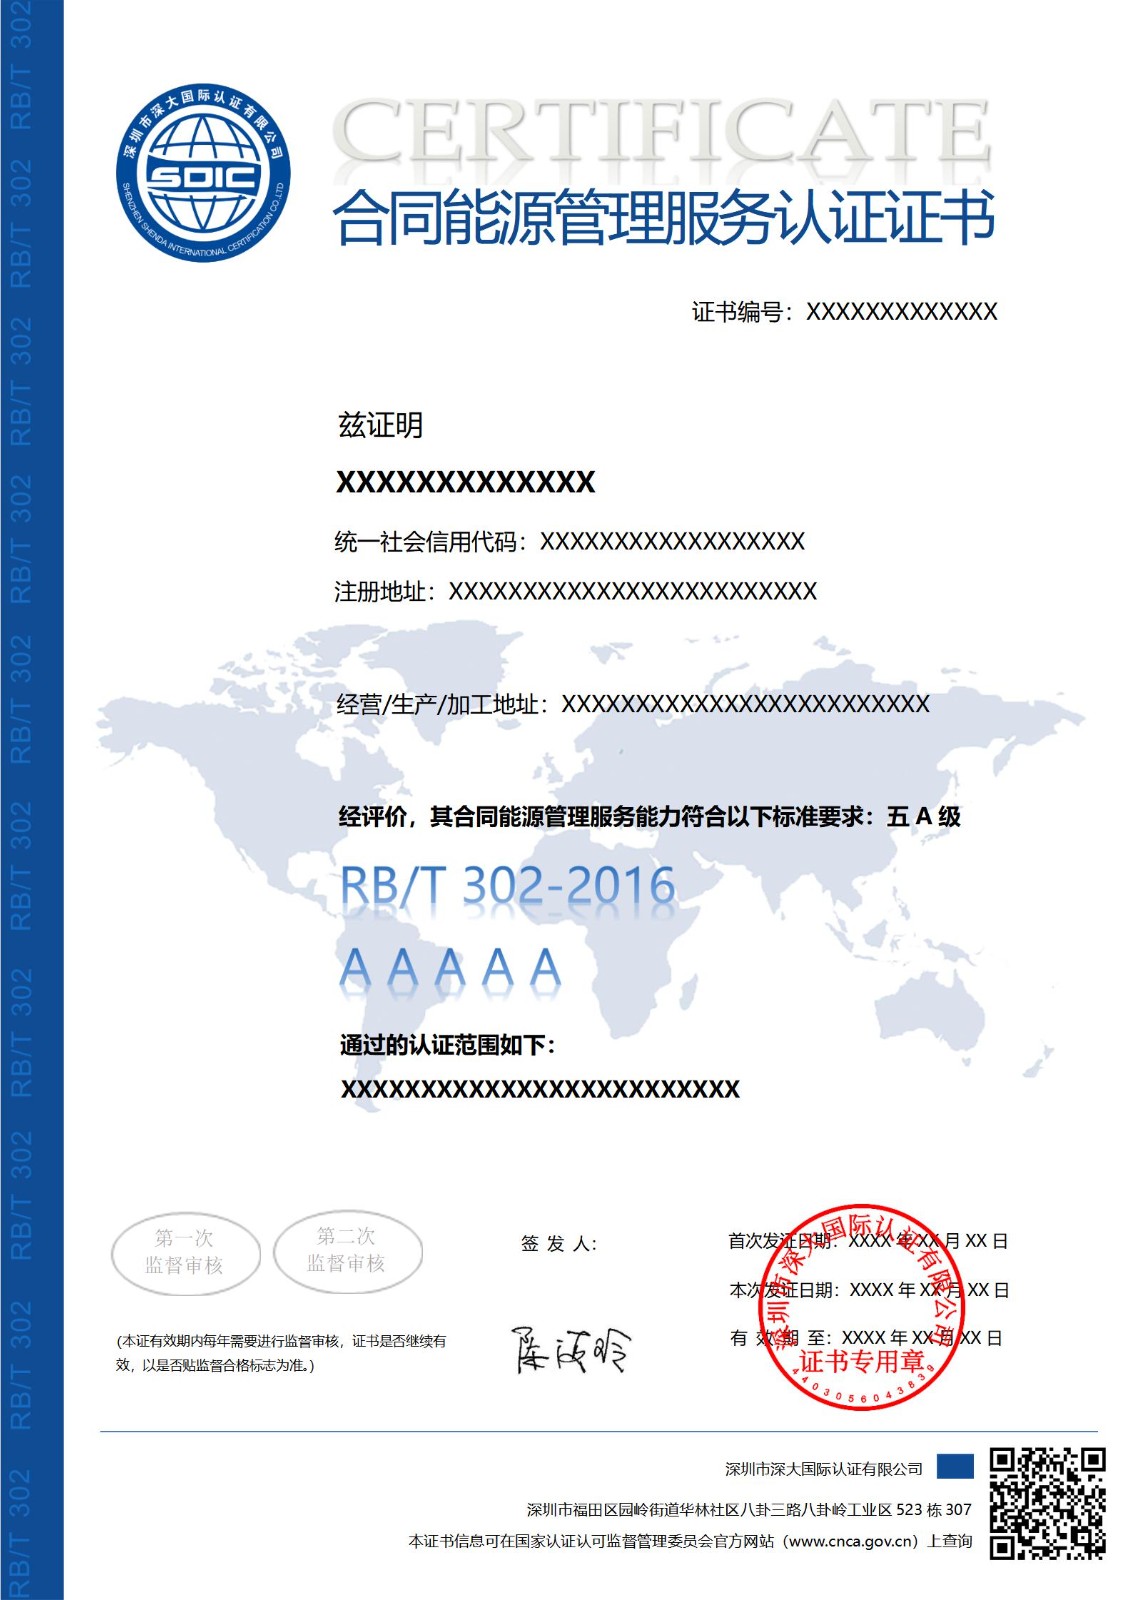 RB/T 302合同能源管理服务认证证书